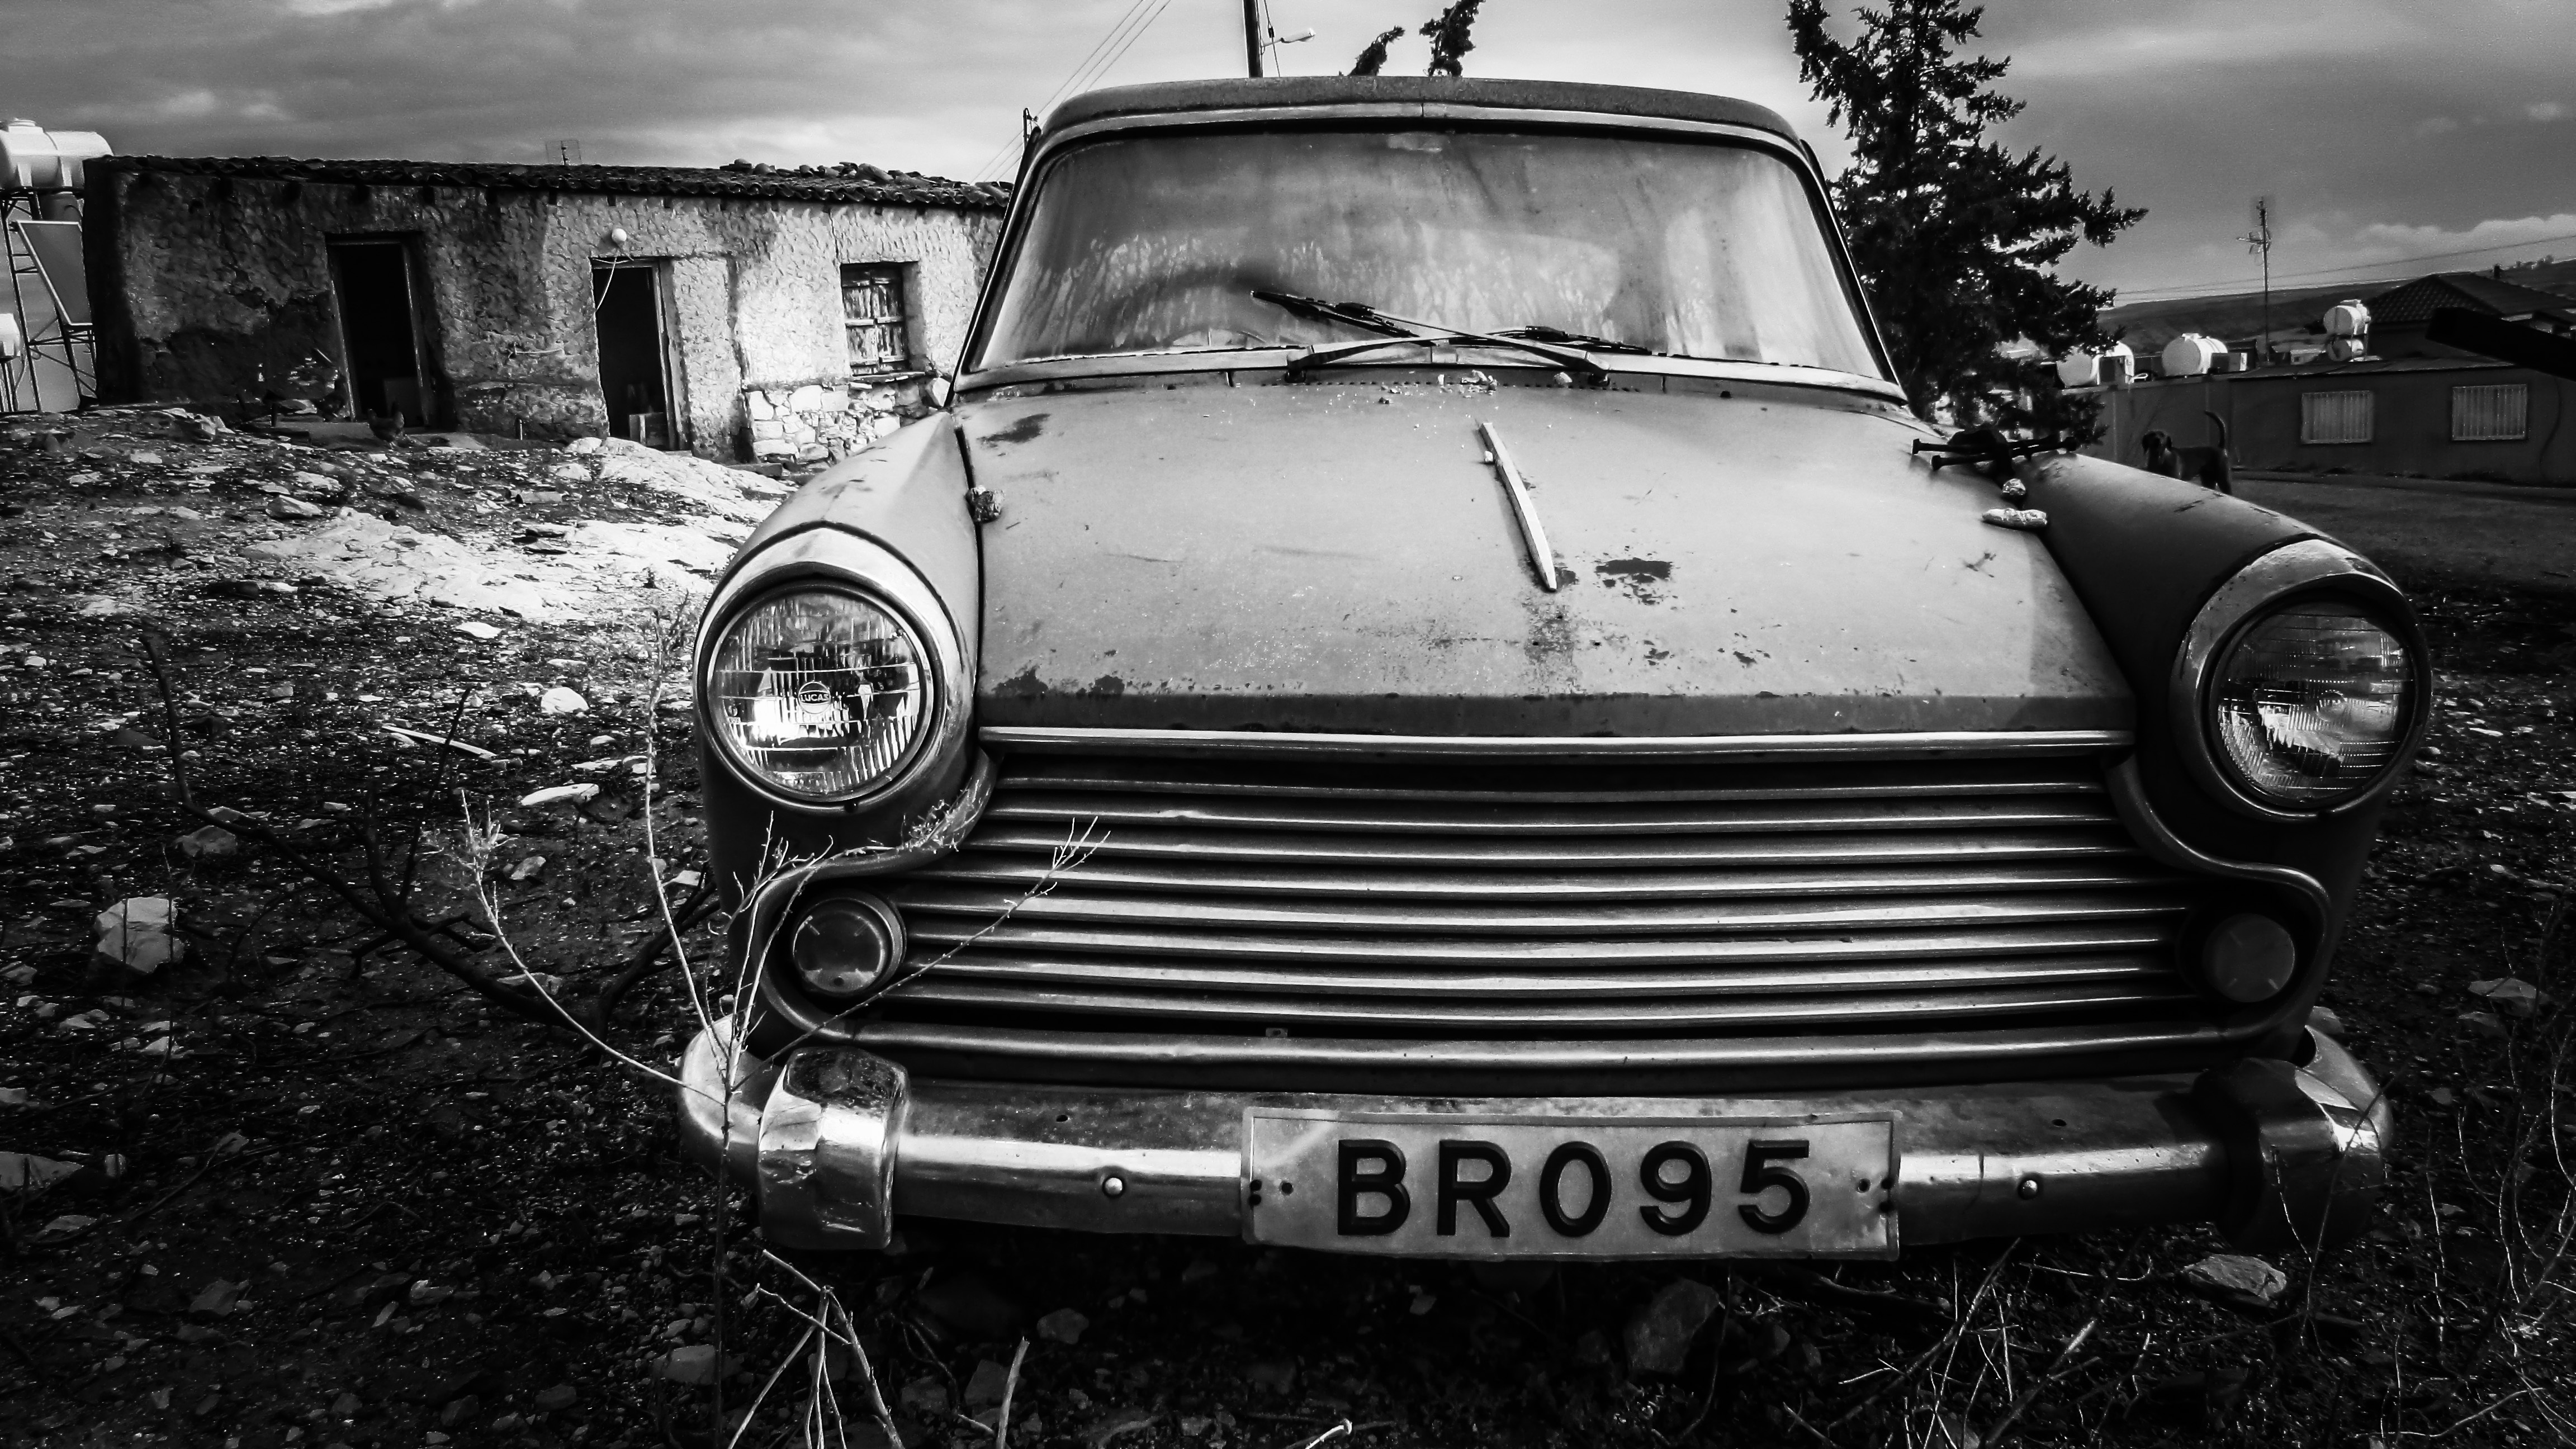 Free Images : black and white, broken, abandoned, old car, motor ...